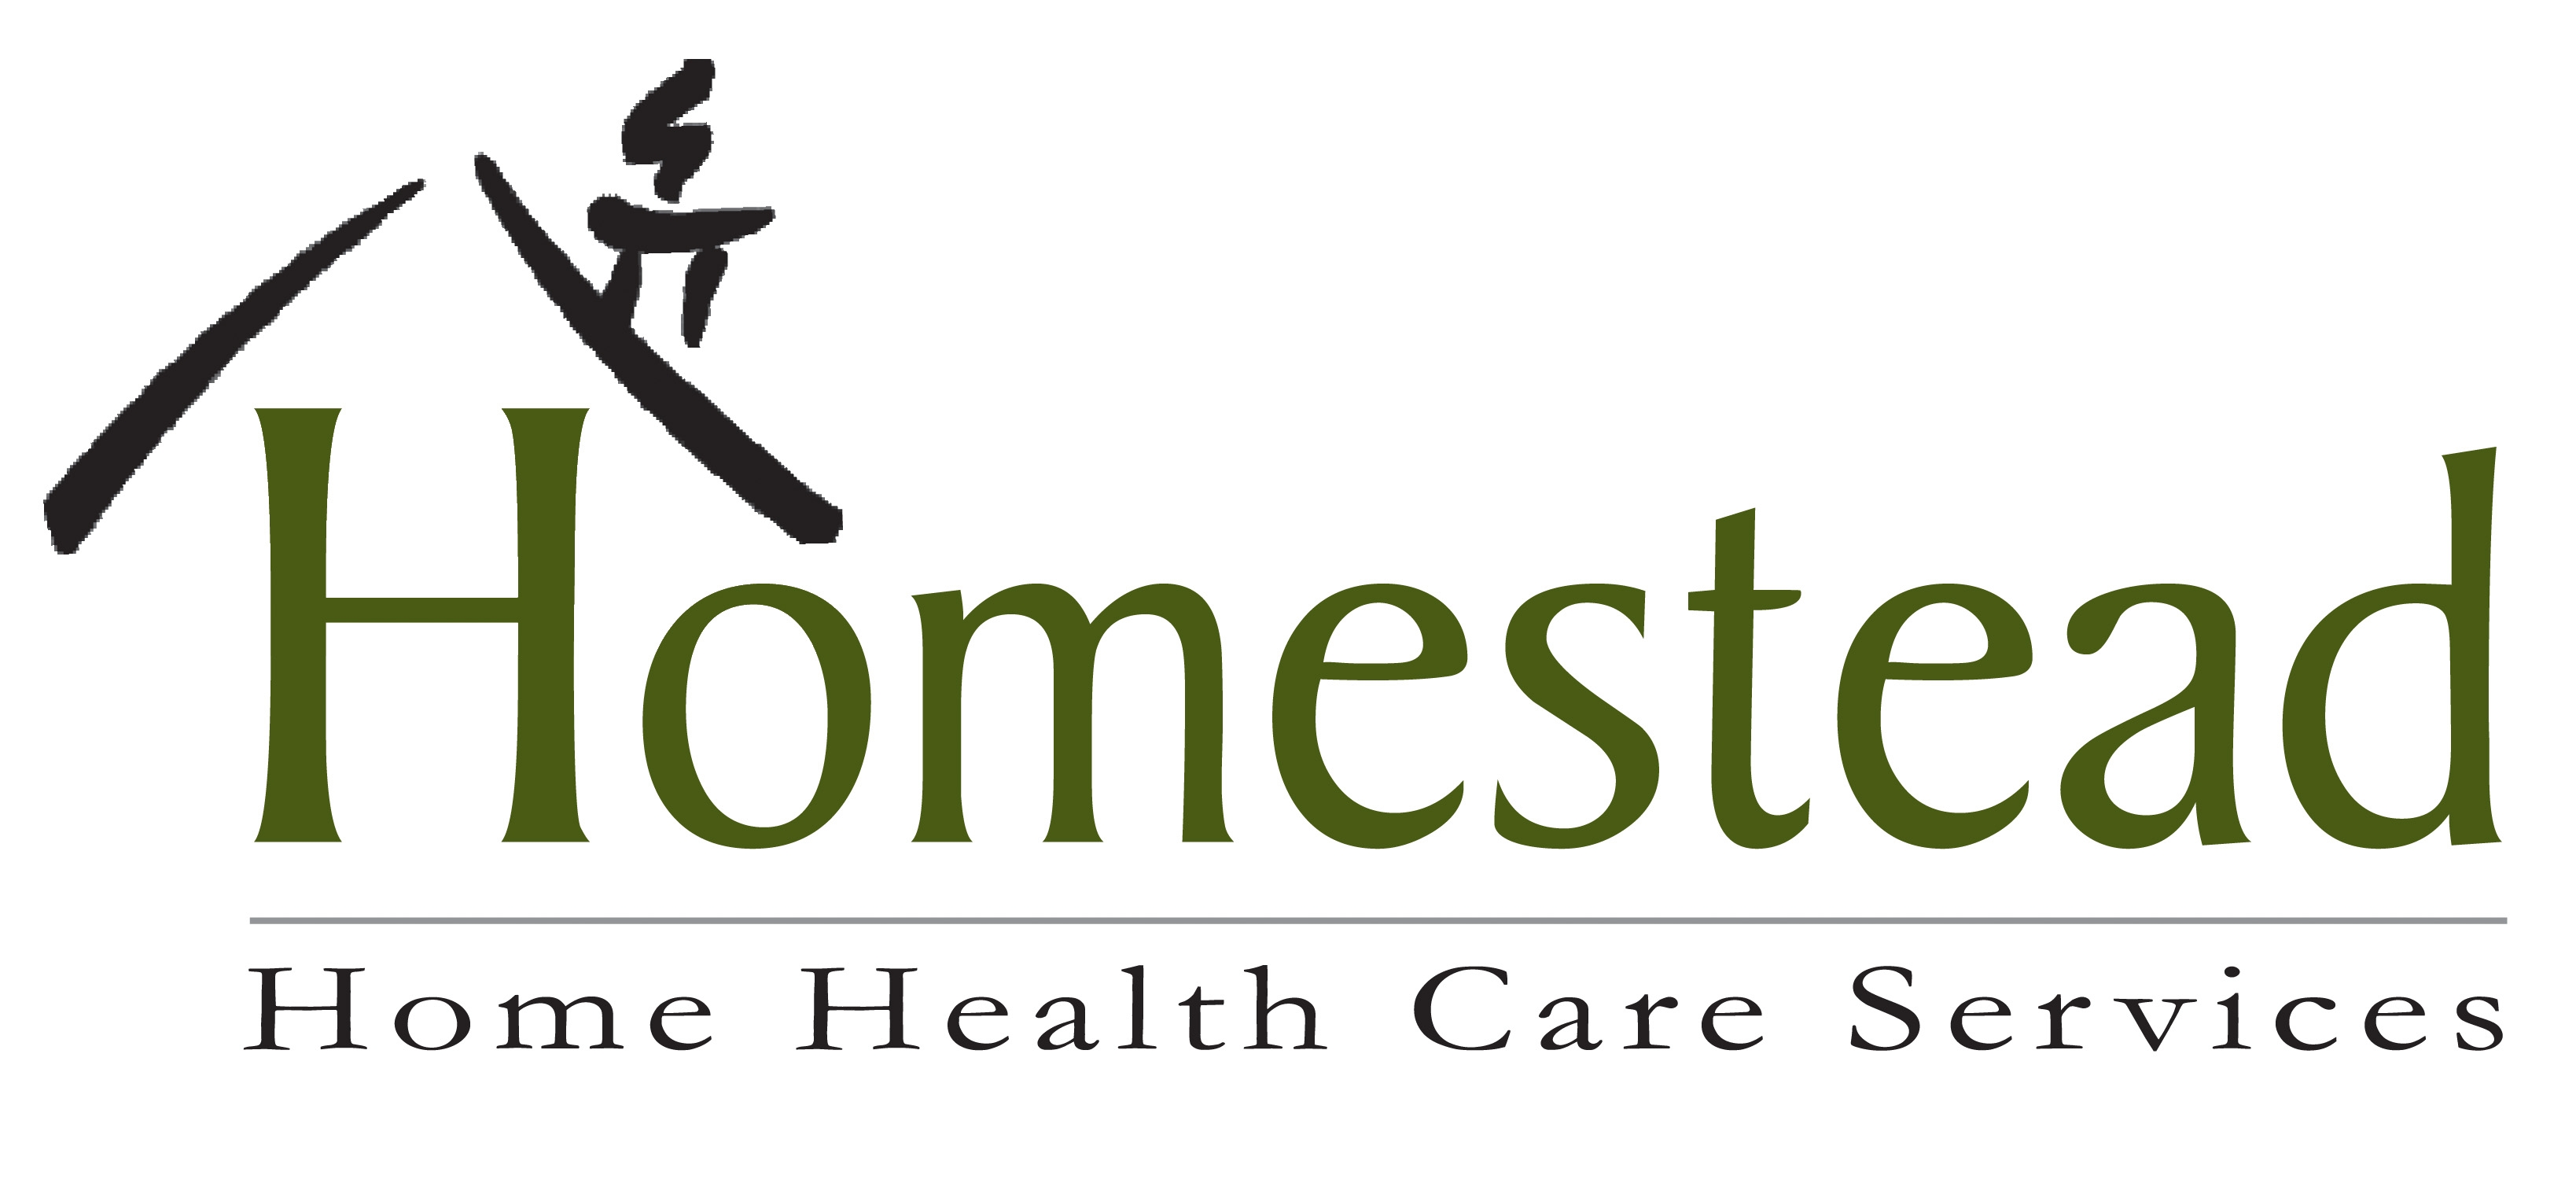 Homestead Logo Final.jpg